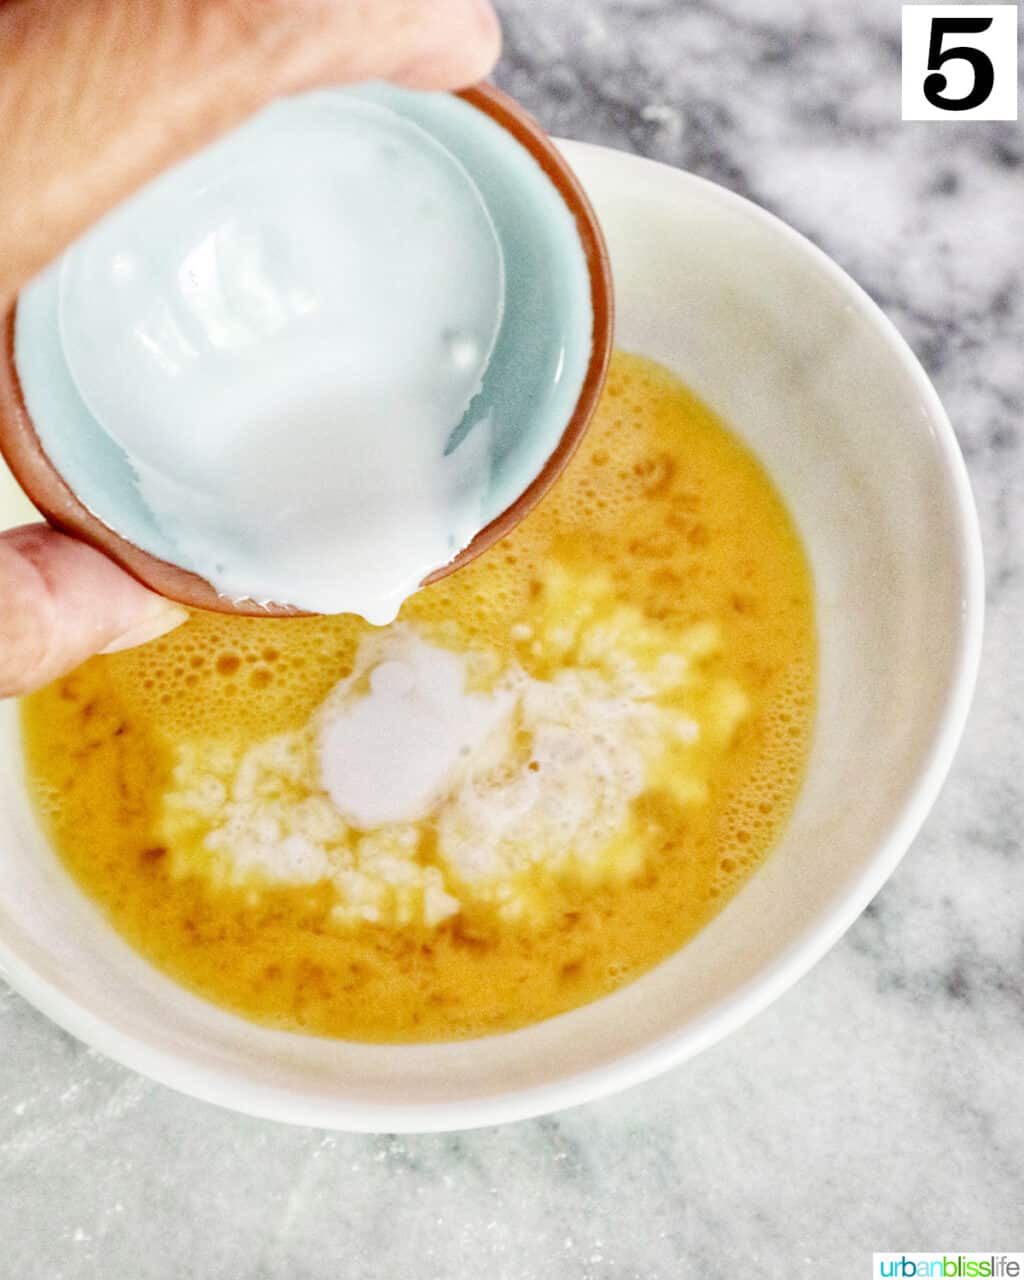 hand pouring cream into a bowl of beaten eggs.